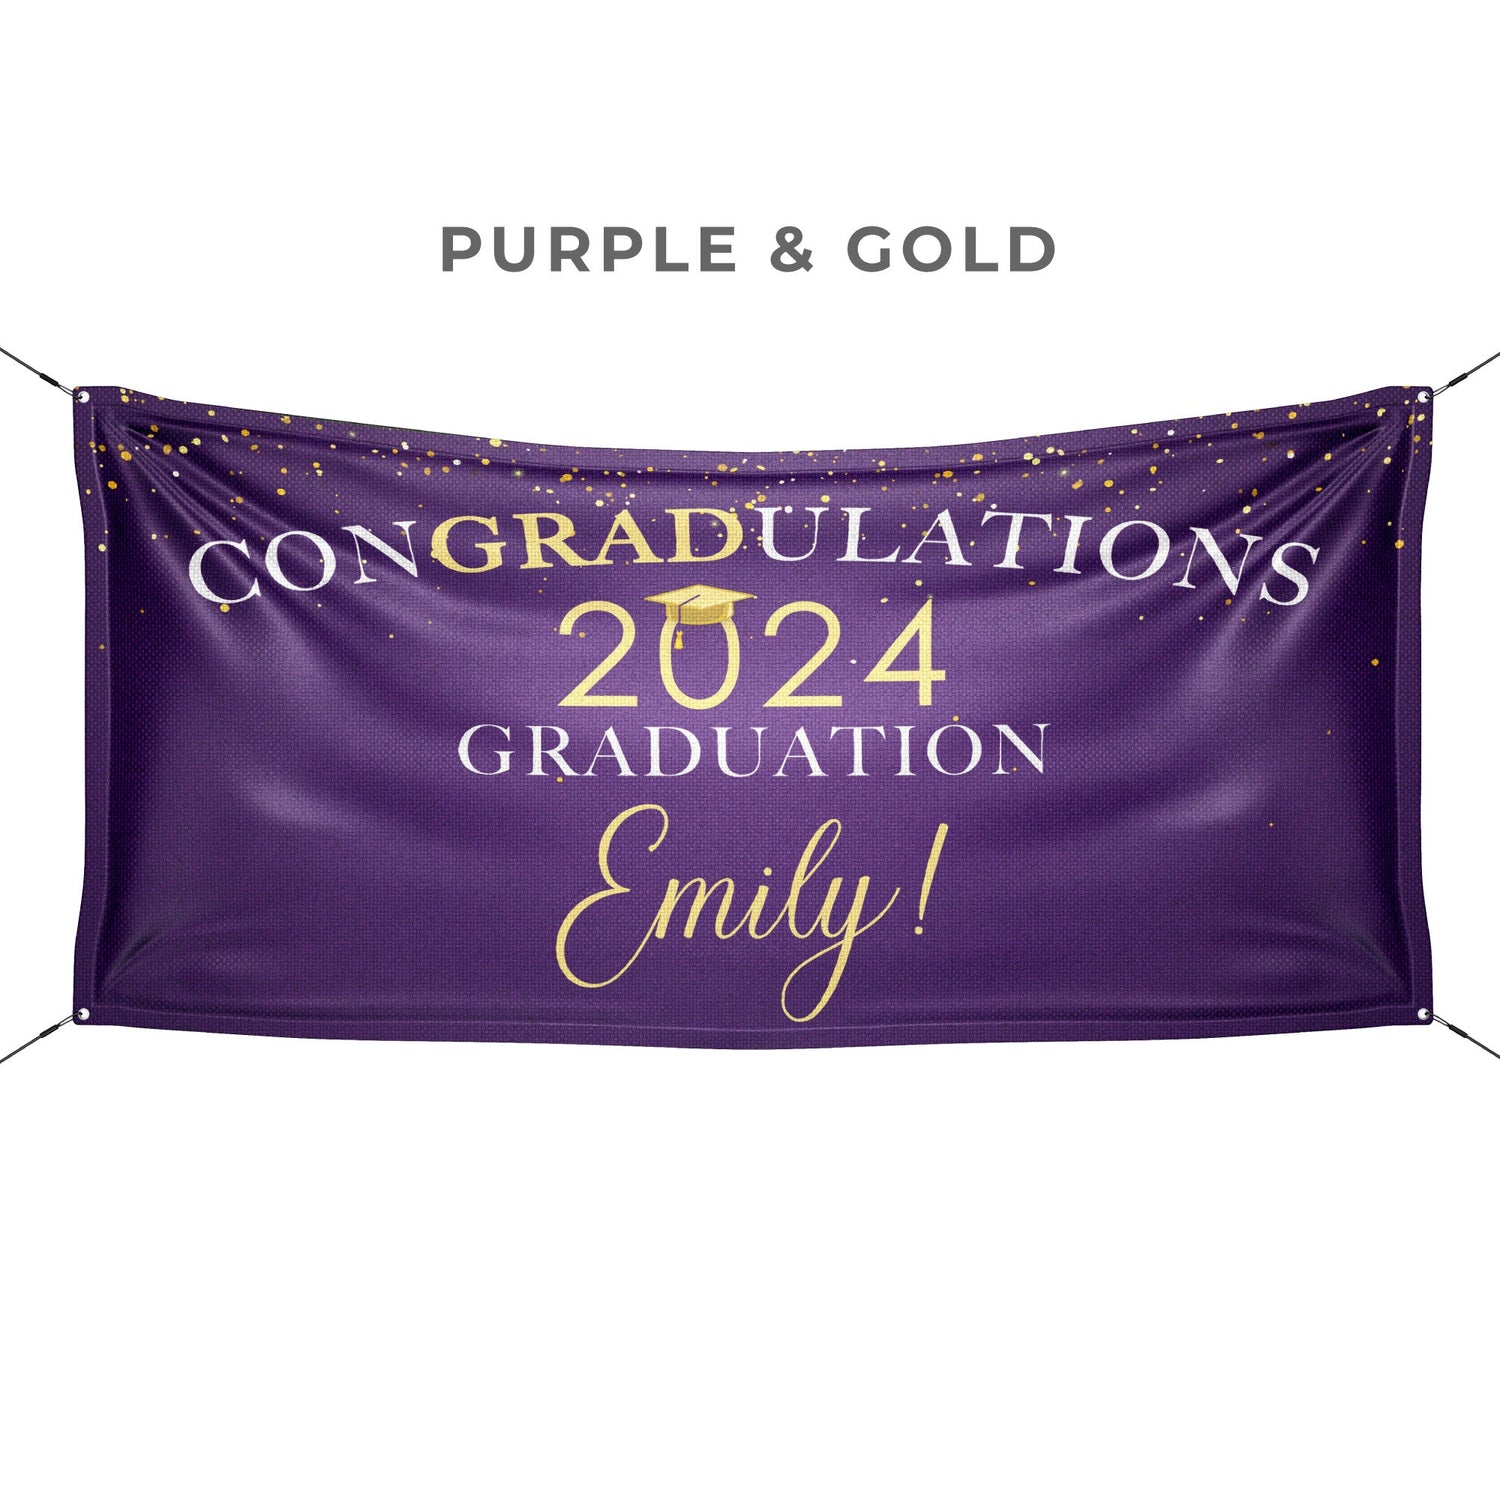 Grad Banners & Gifts - Congrats Graduation Banner